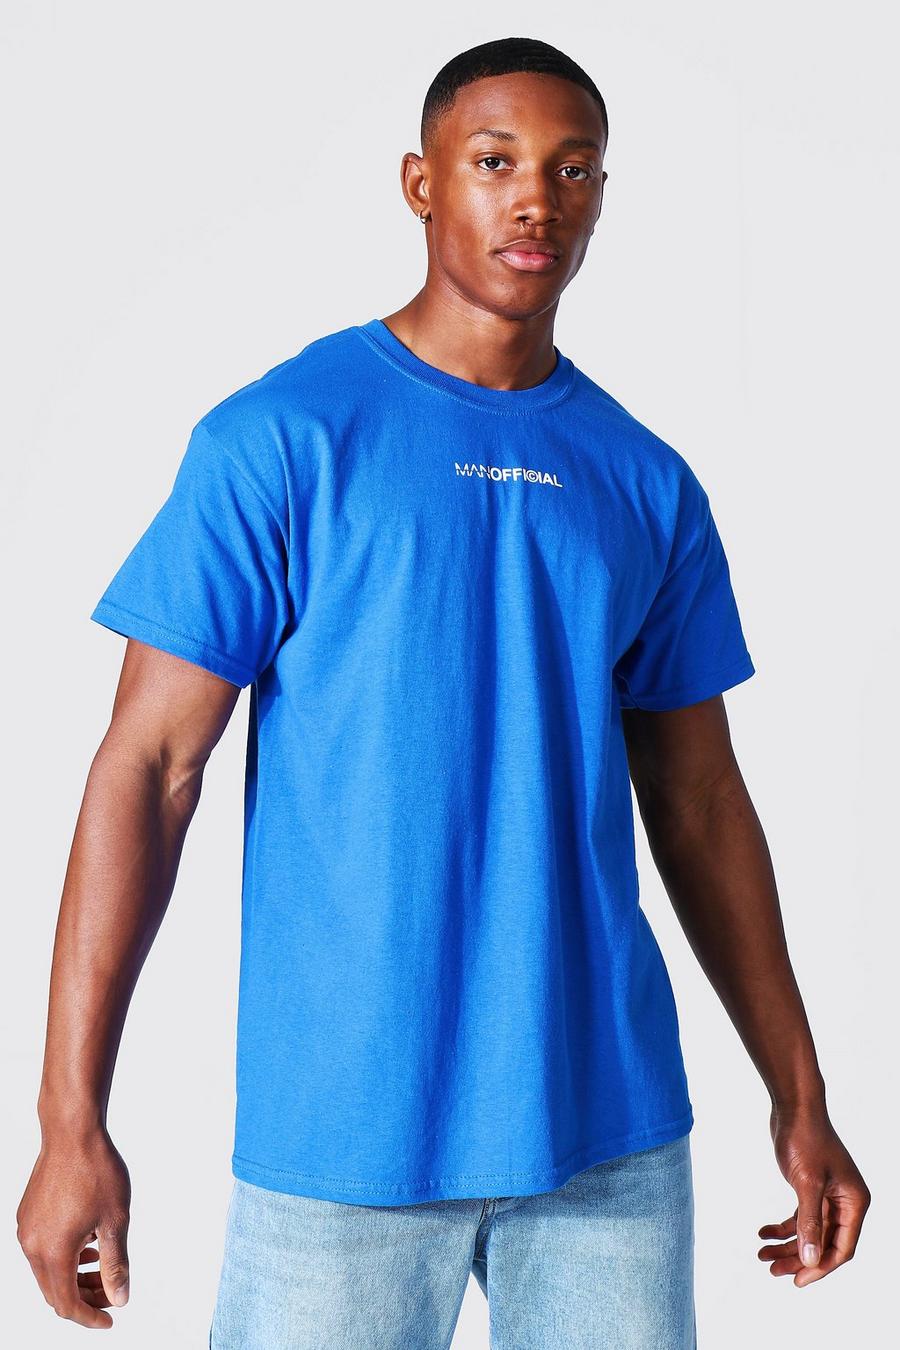 Man Official T-Shirt, Cobalt bleu image number 1